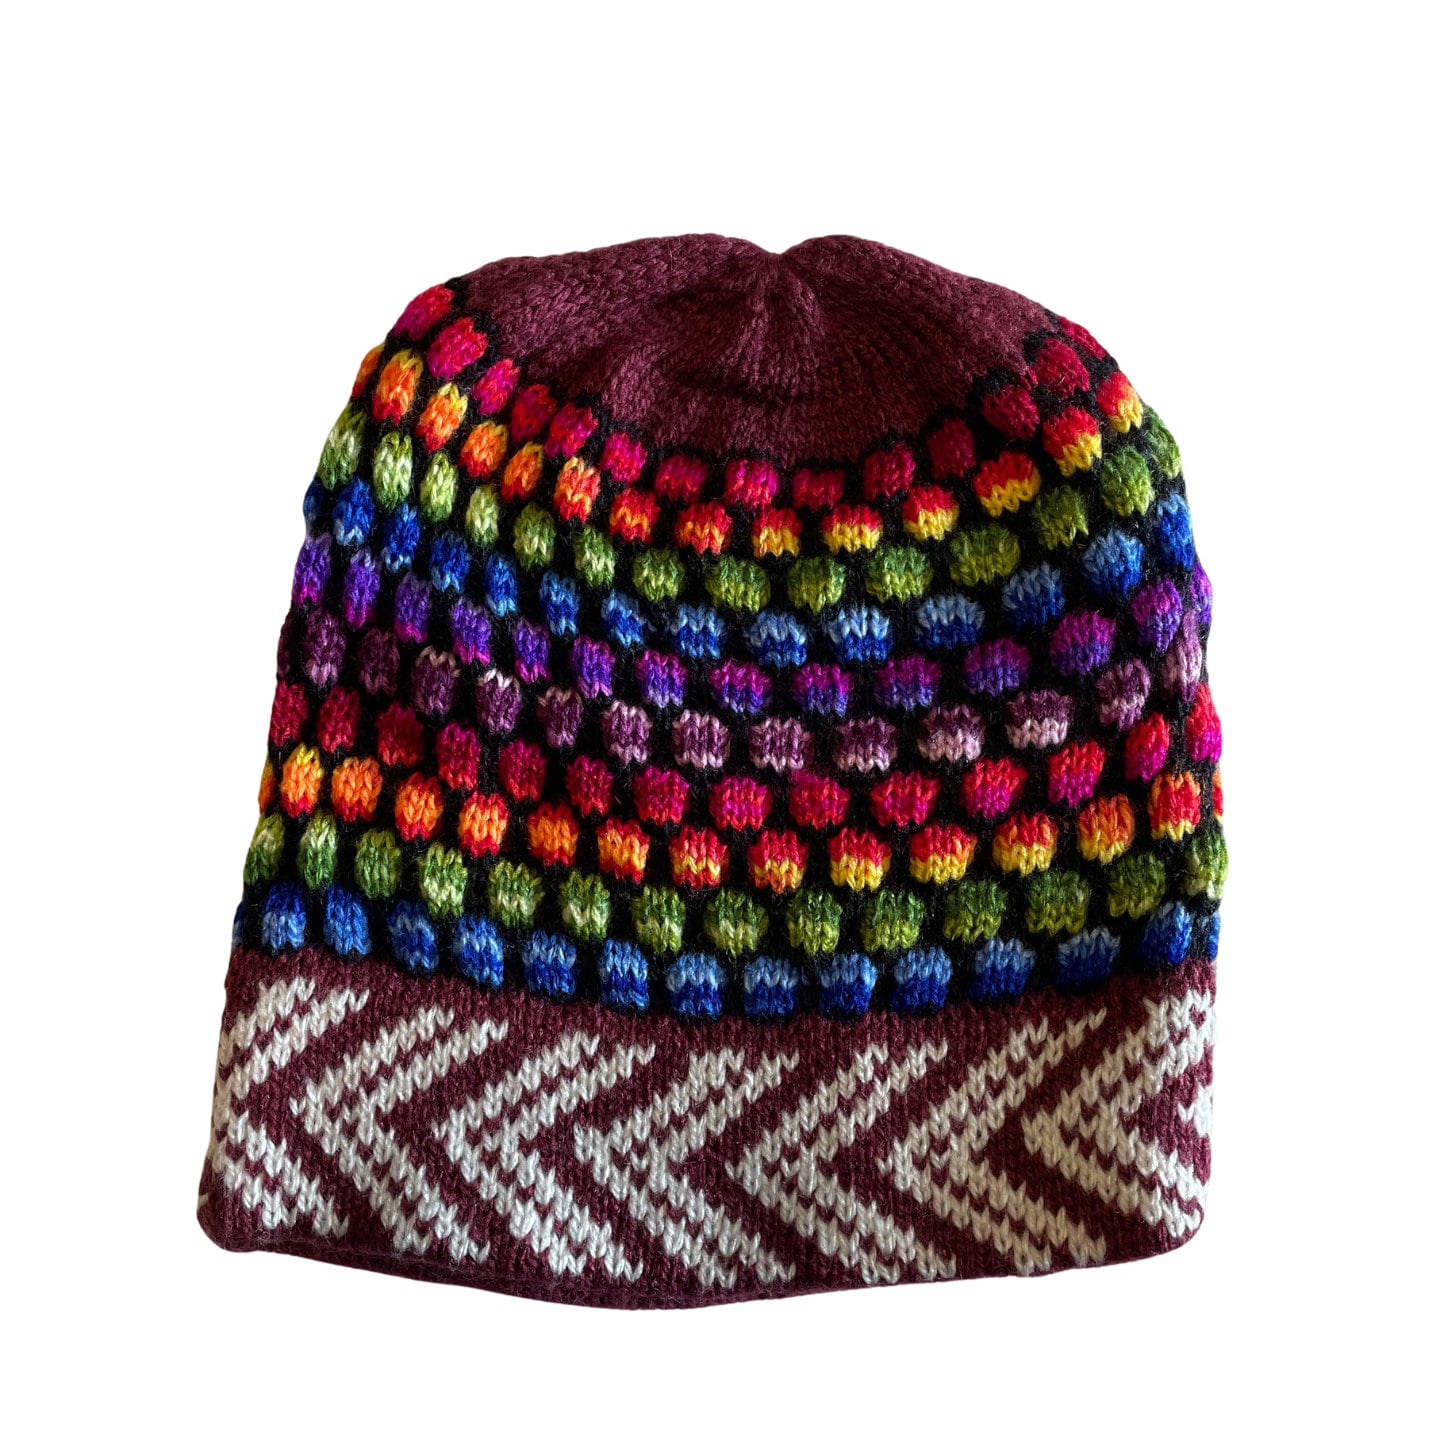 Knitted Alpaca Beanie Hat | Maroon